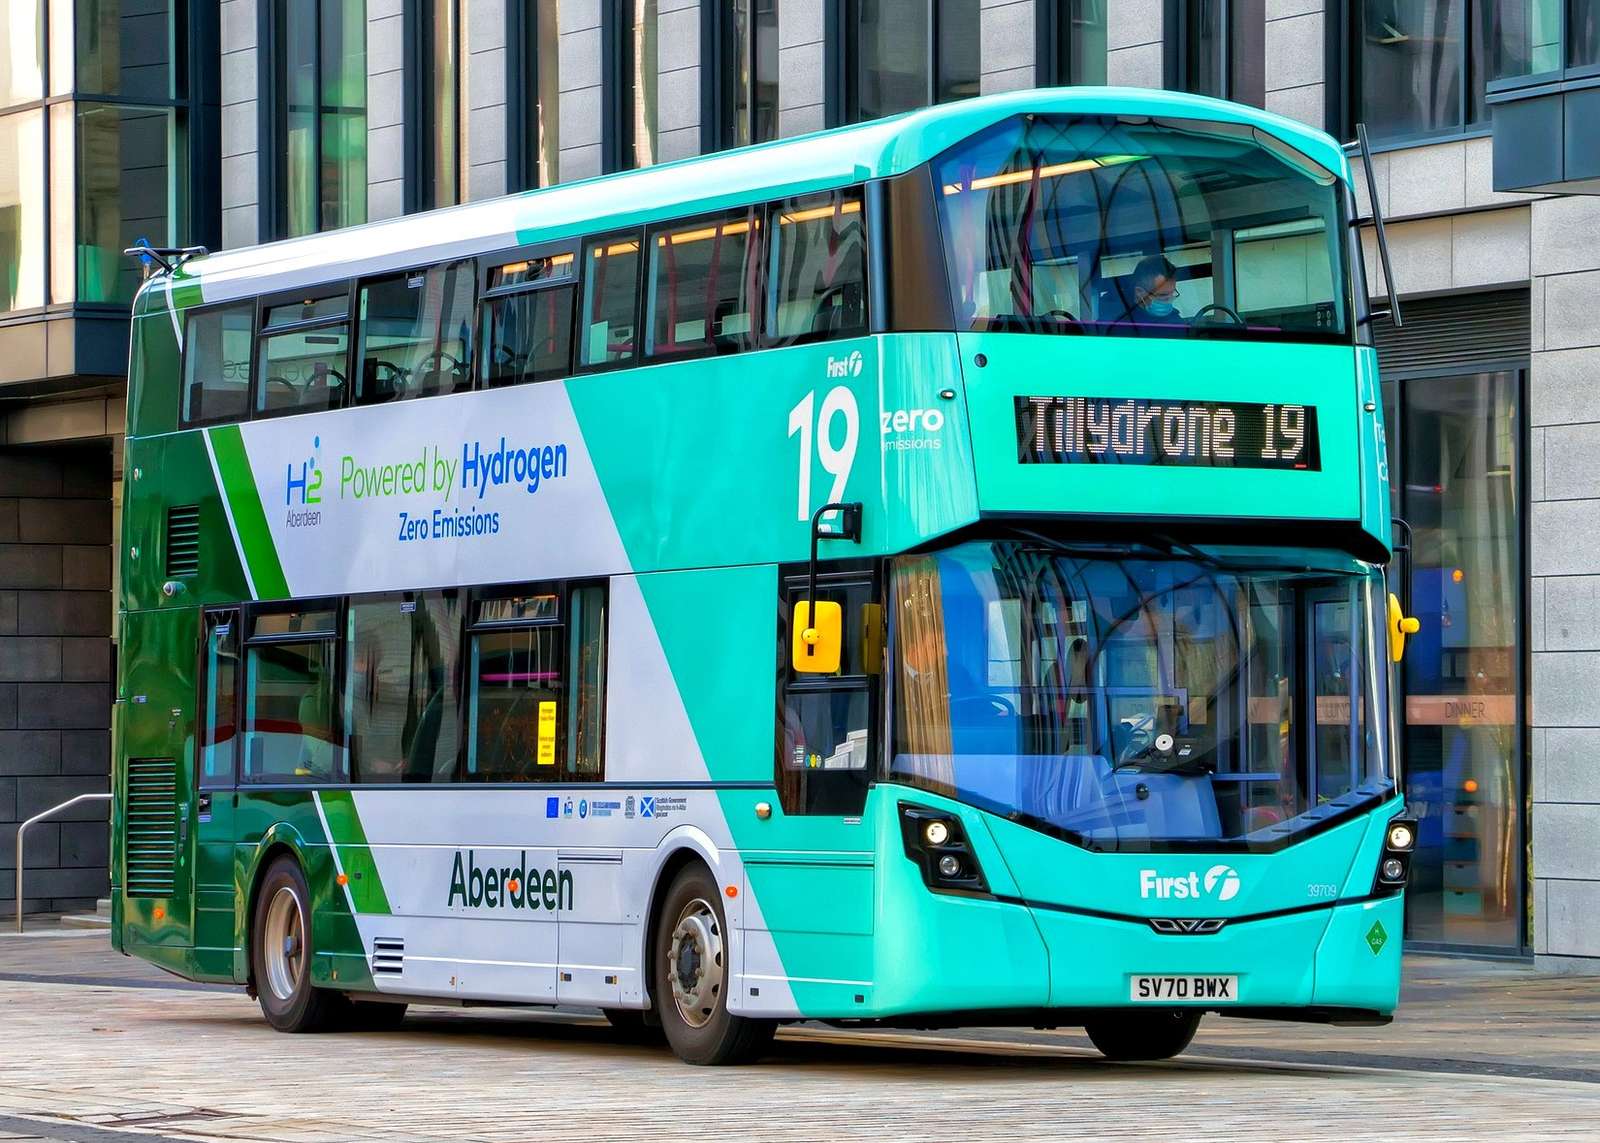 Autobuz alimentat cu hidrogen (Scoția, Aberdeen) puzzle online